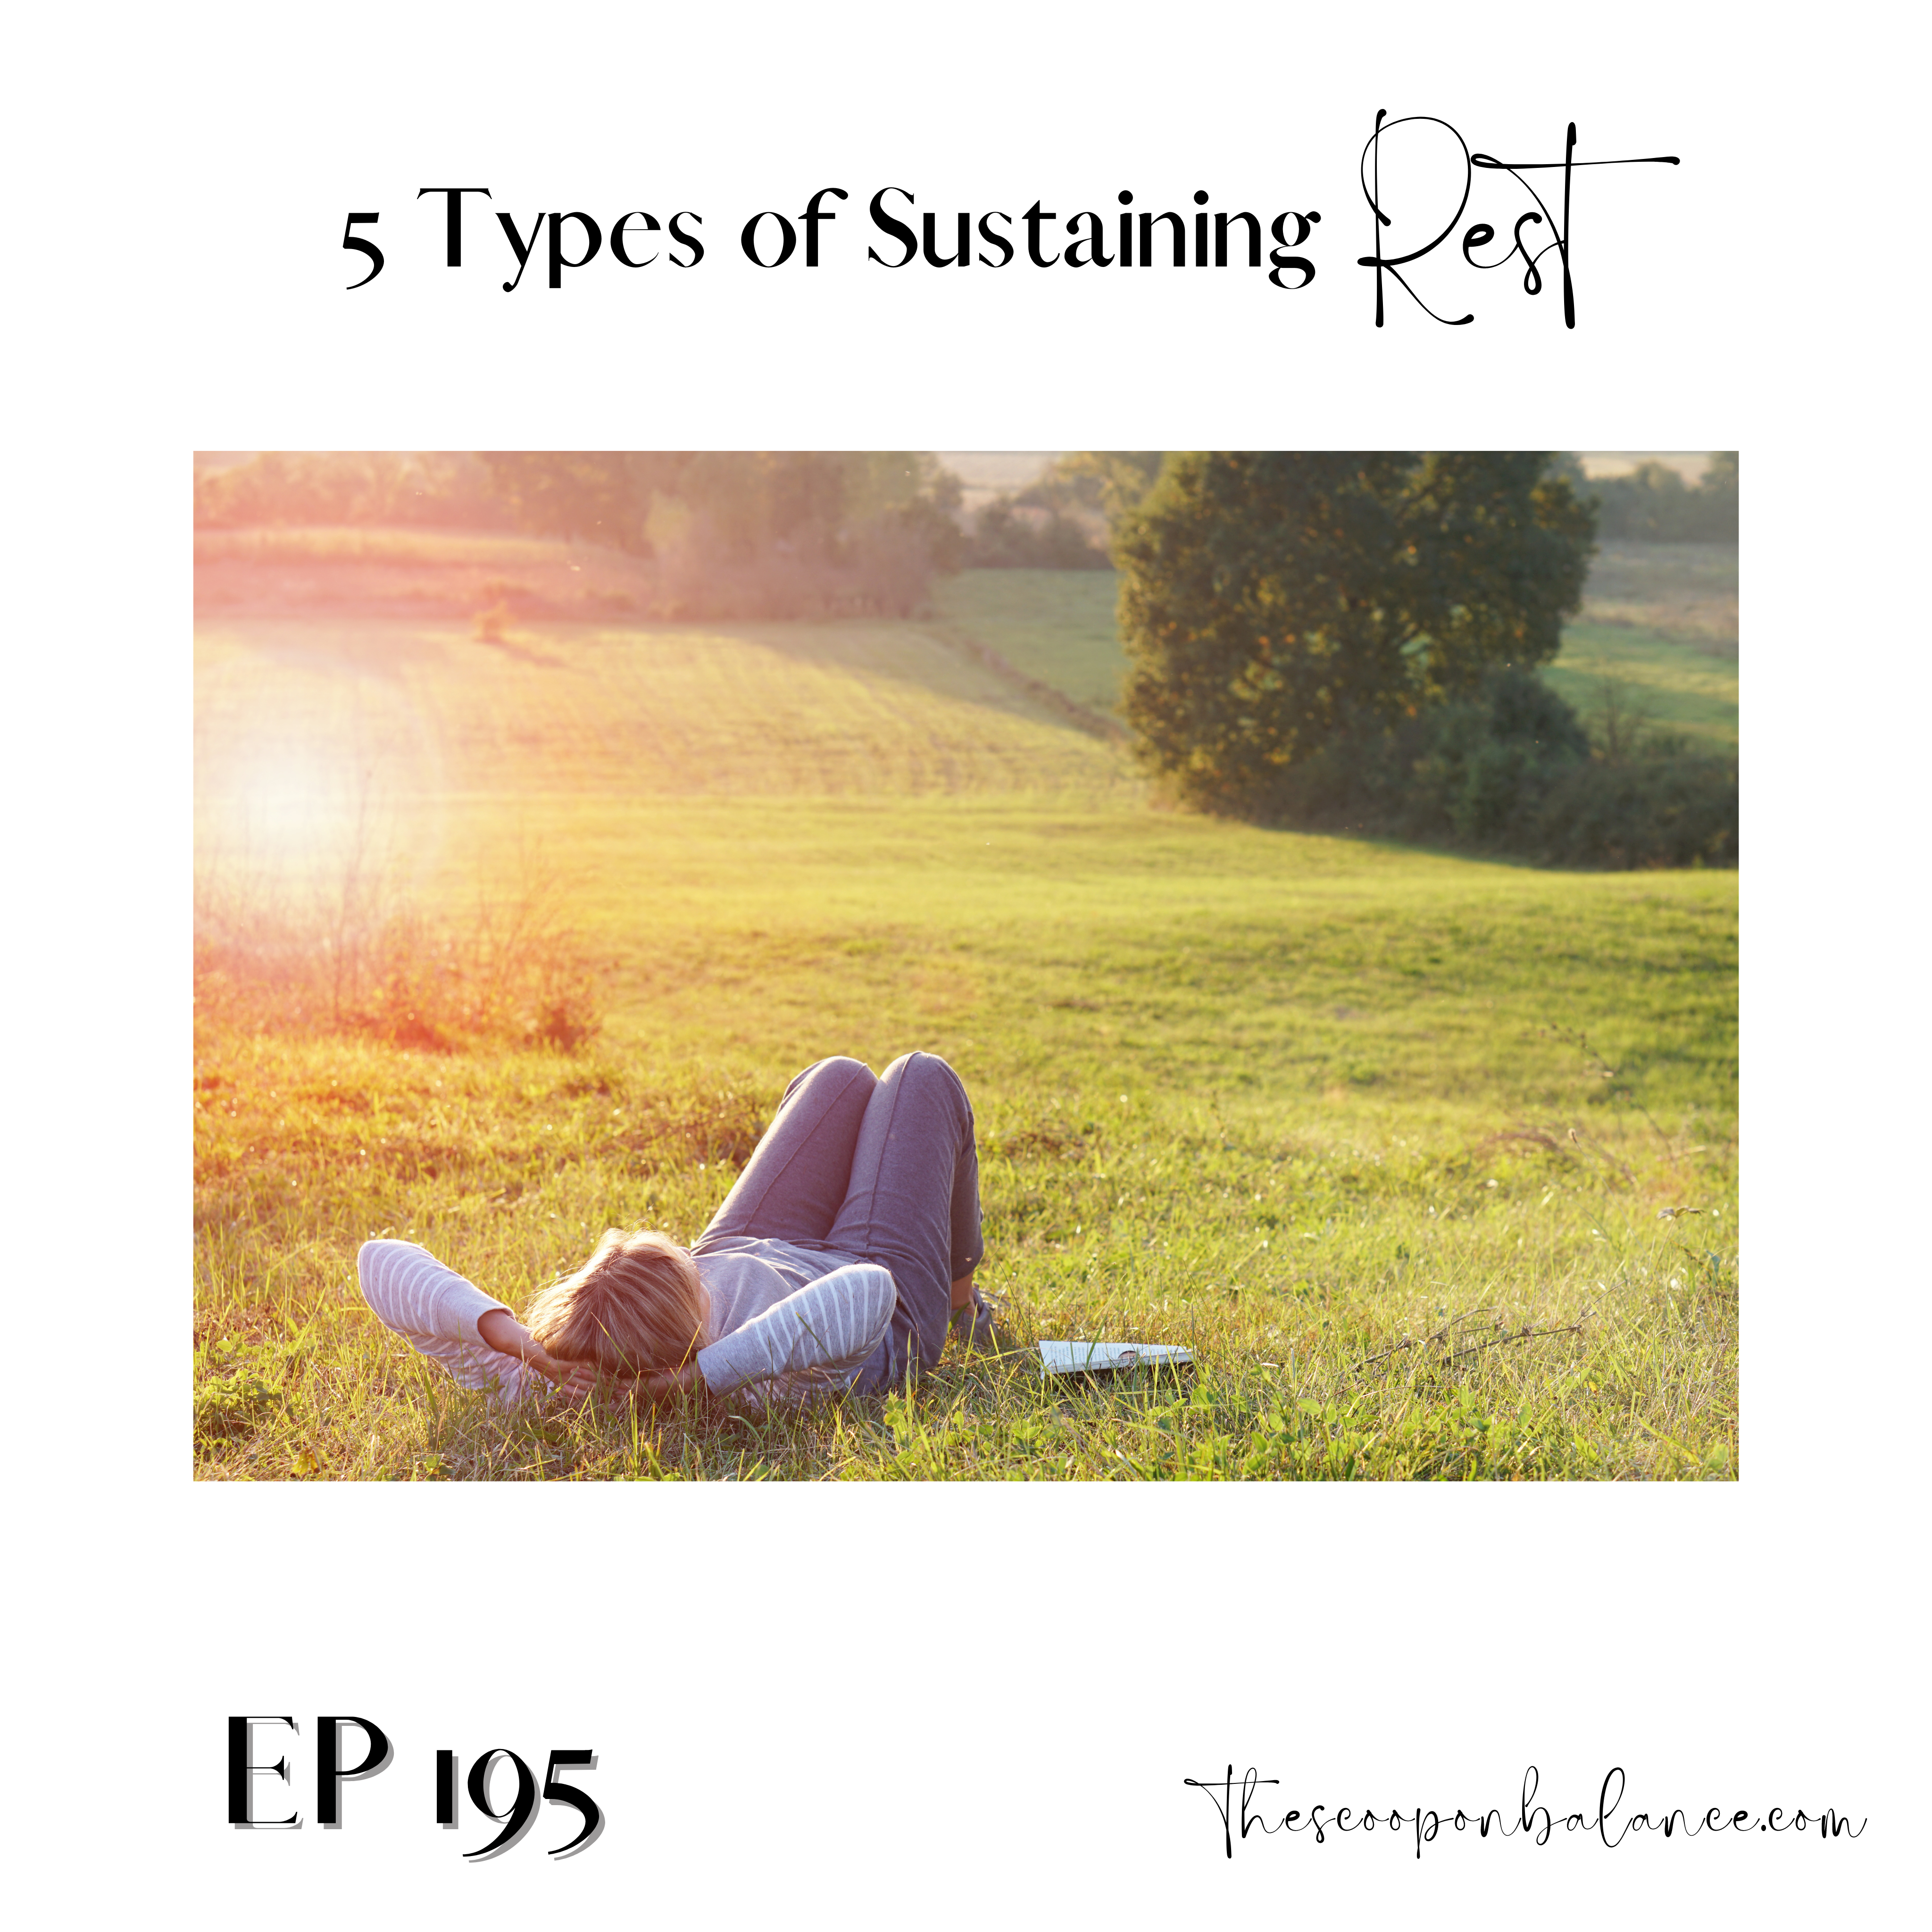 Ep 195: 5 Types of Sustaining Rest